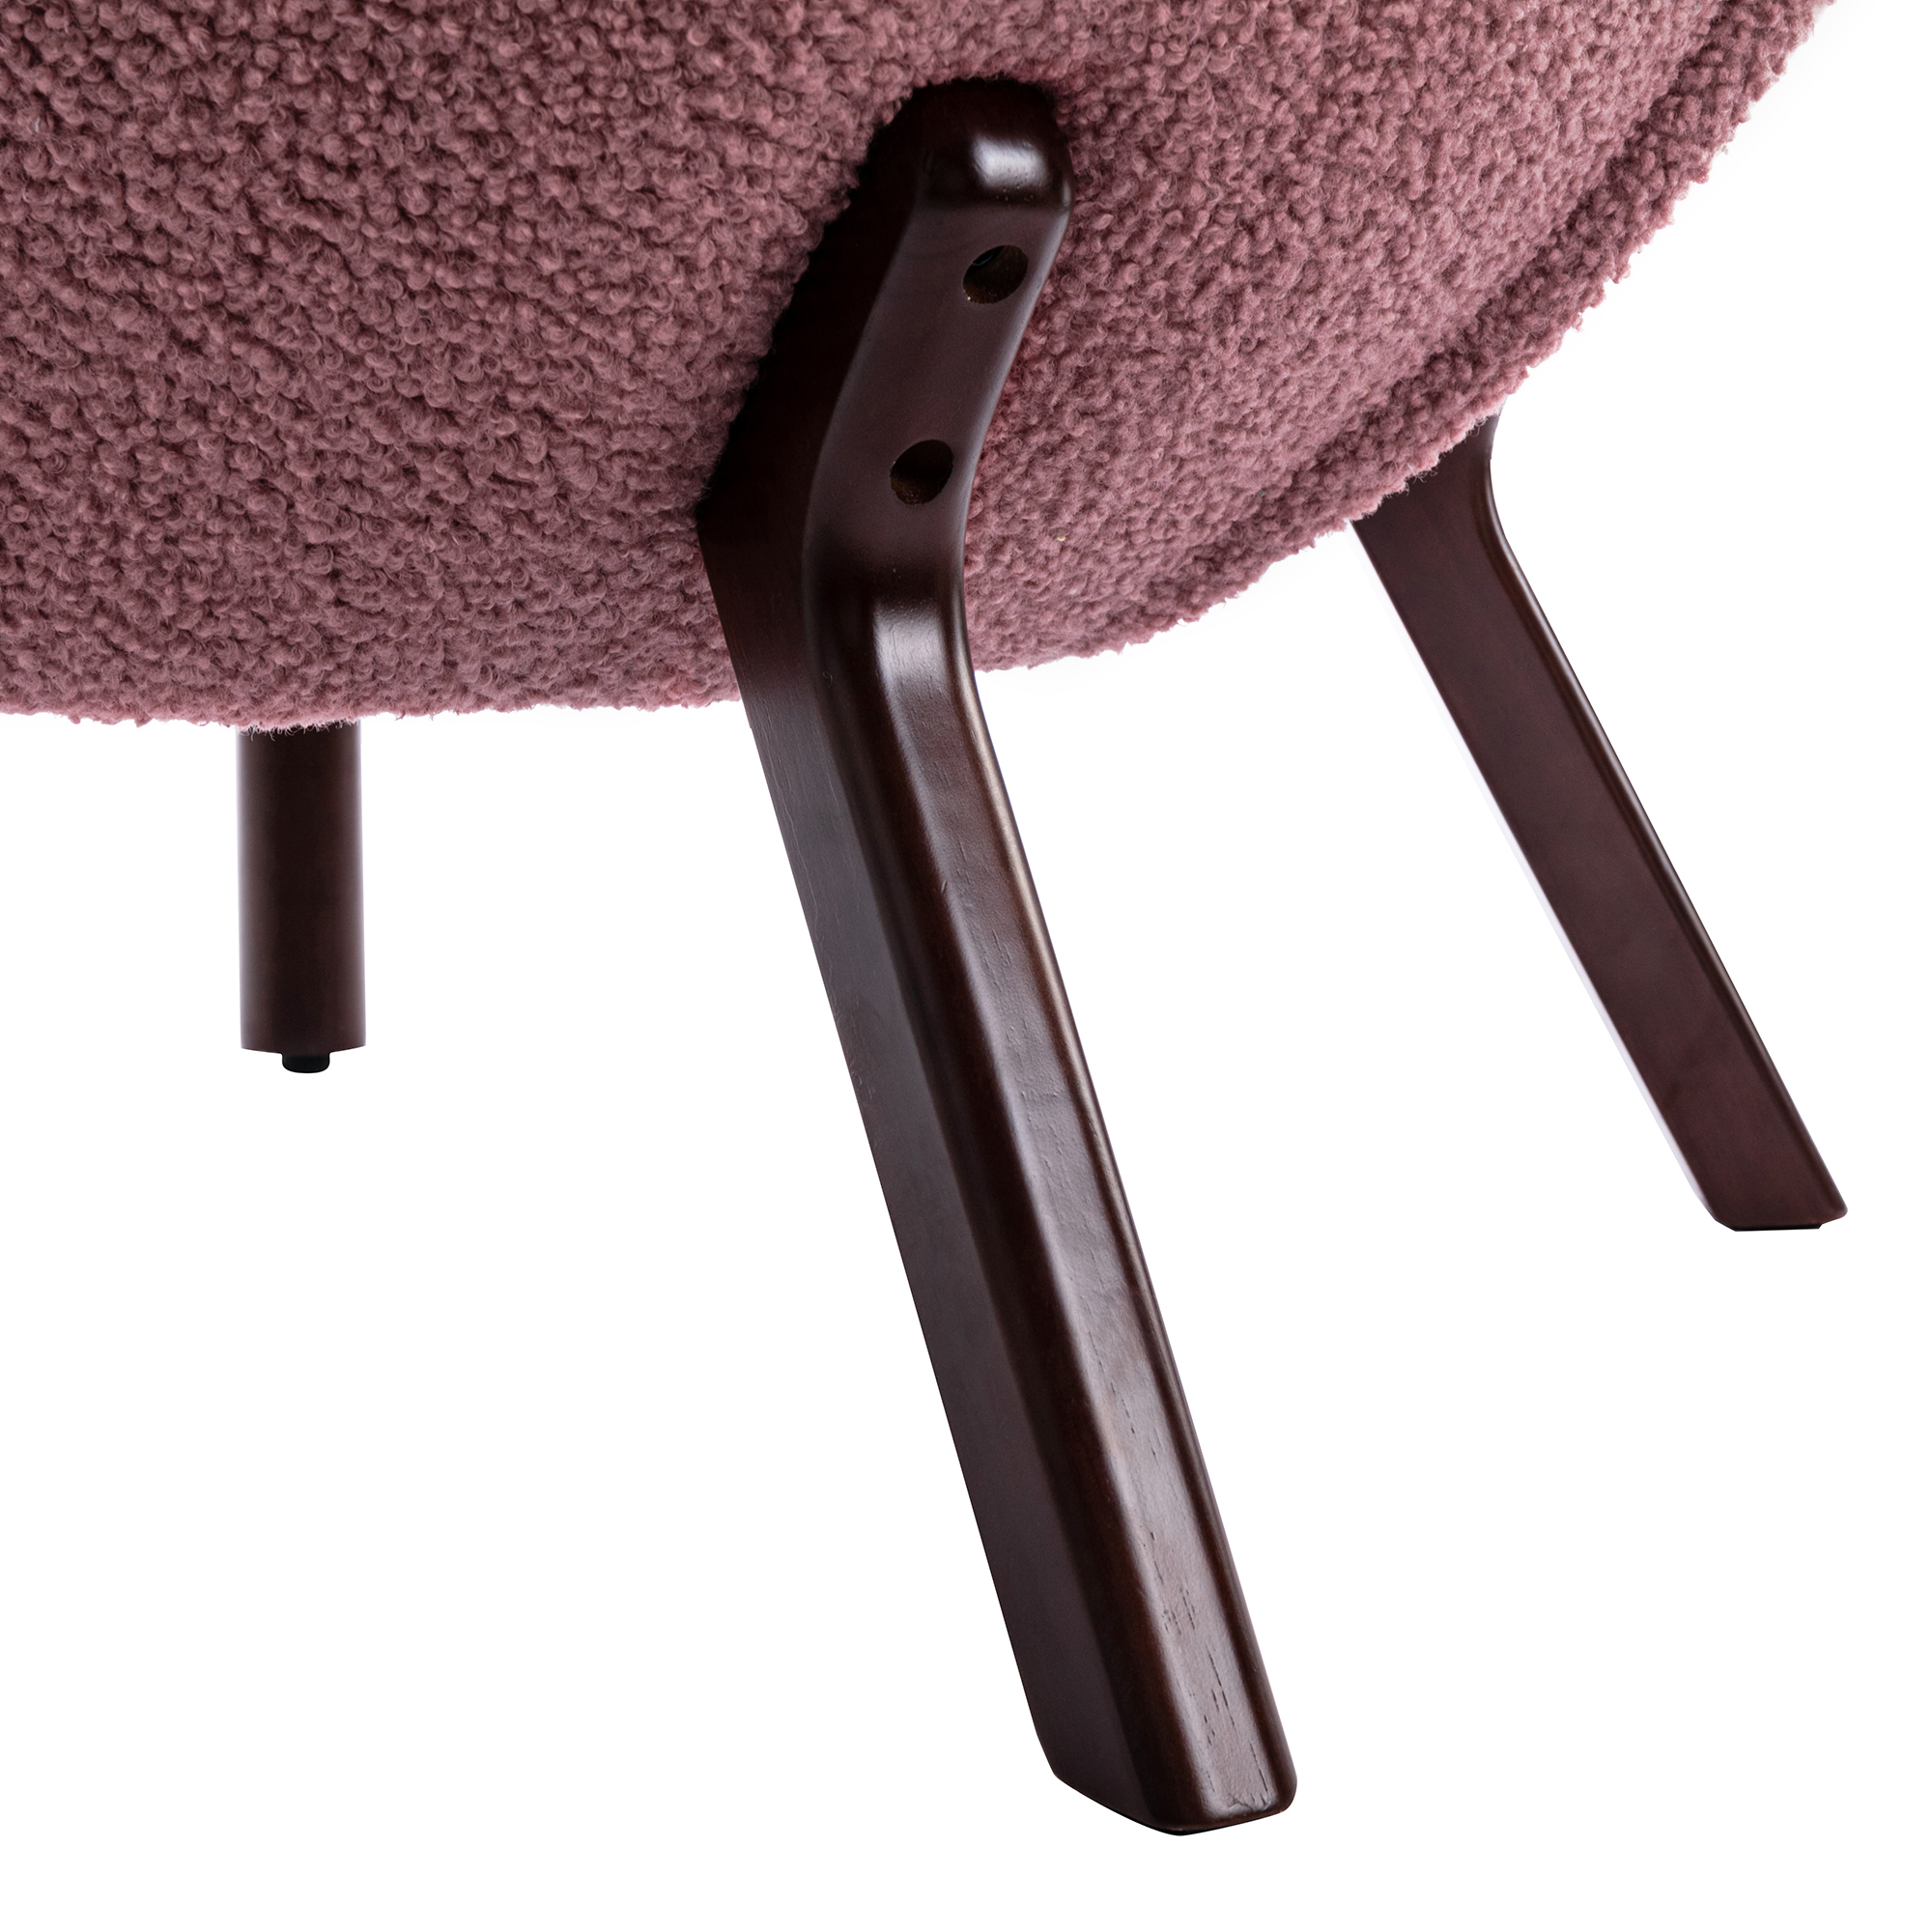 Polyester Modern Accent Chair - WF289650AAR